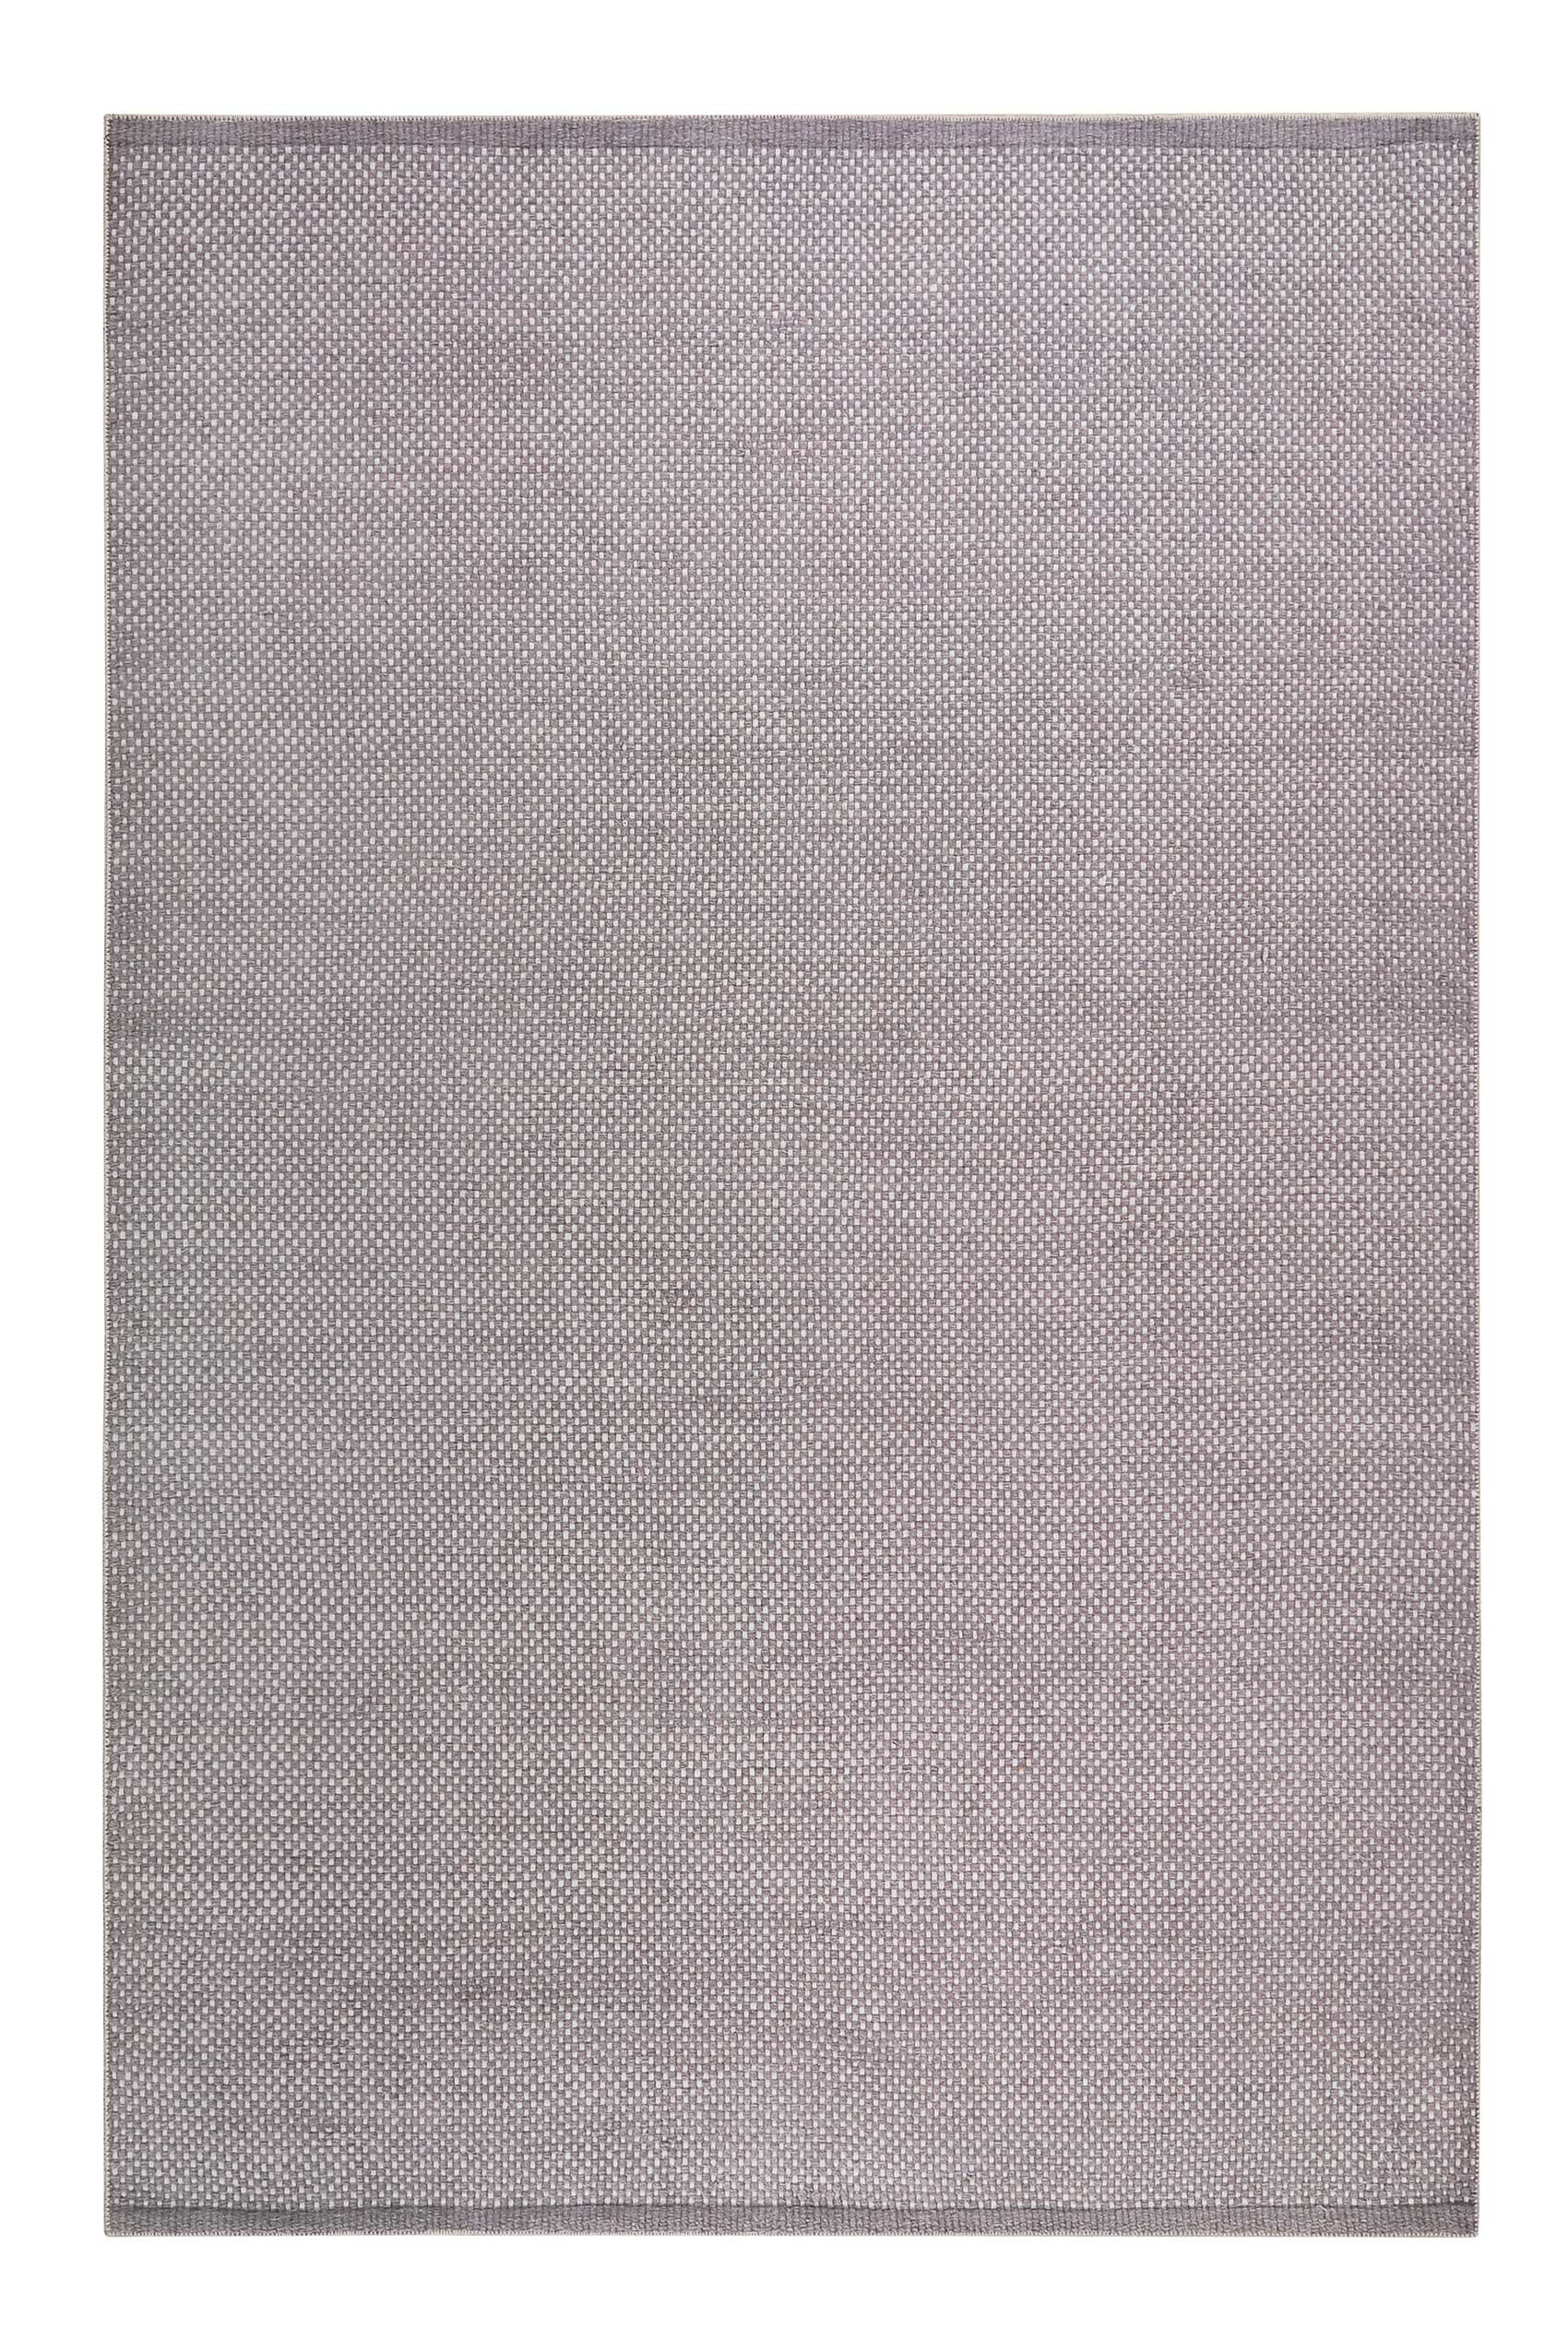 Esprit Teppich Grau » Primi « - Ansicht 1